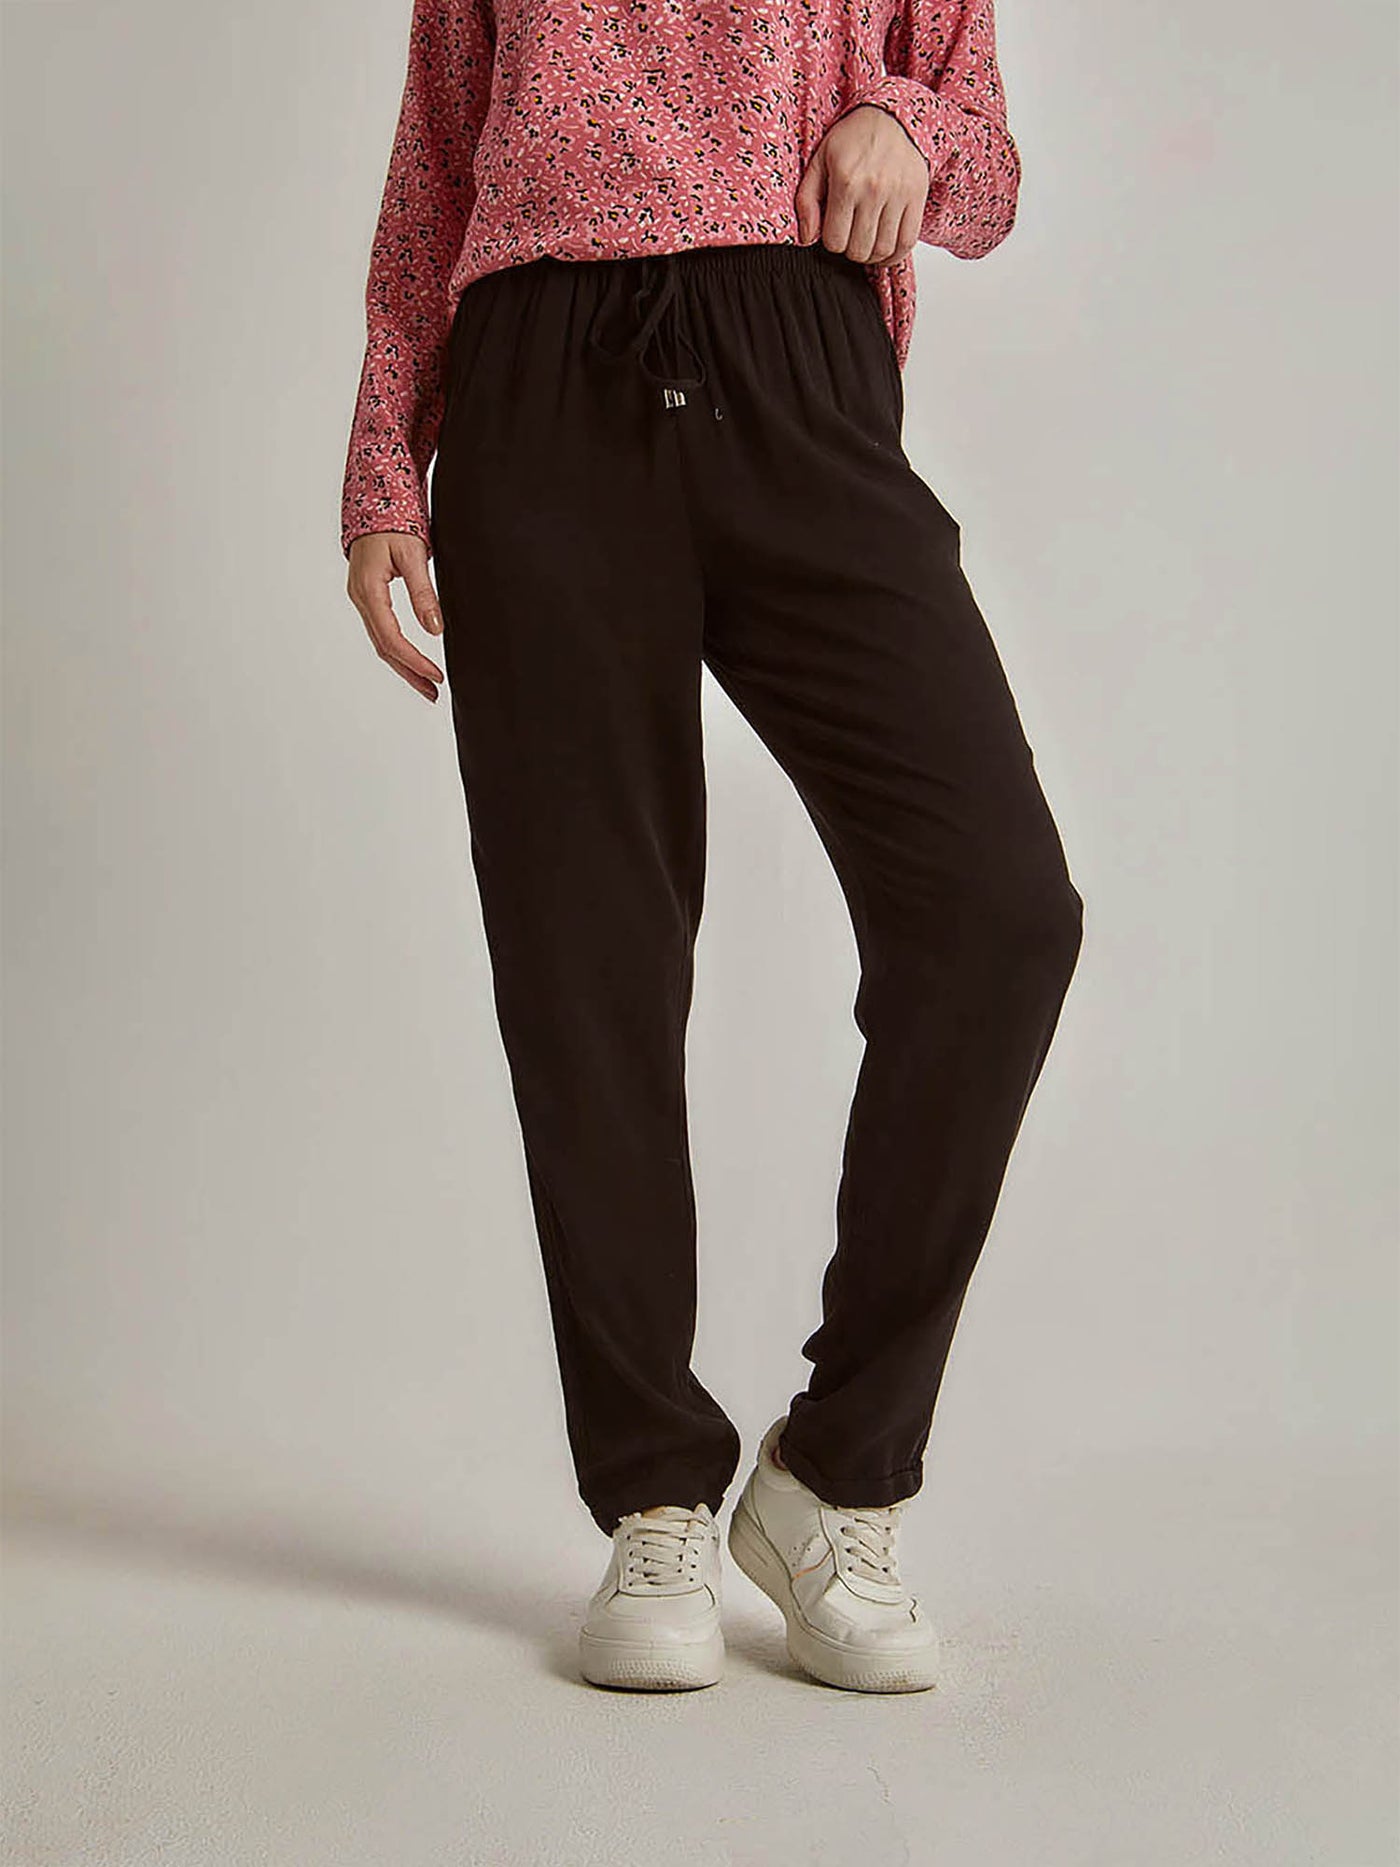 Pants - Drawstring - Fashionable